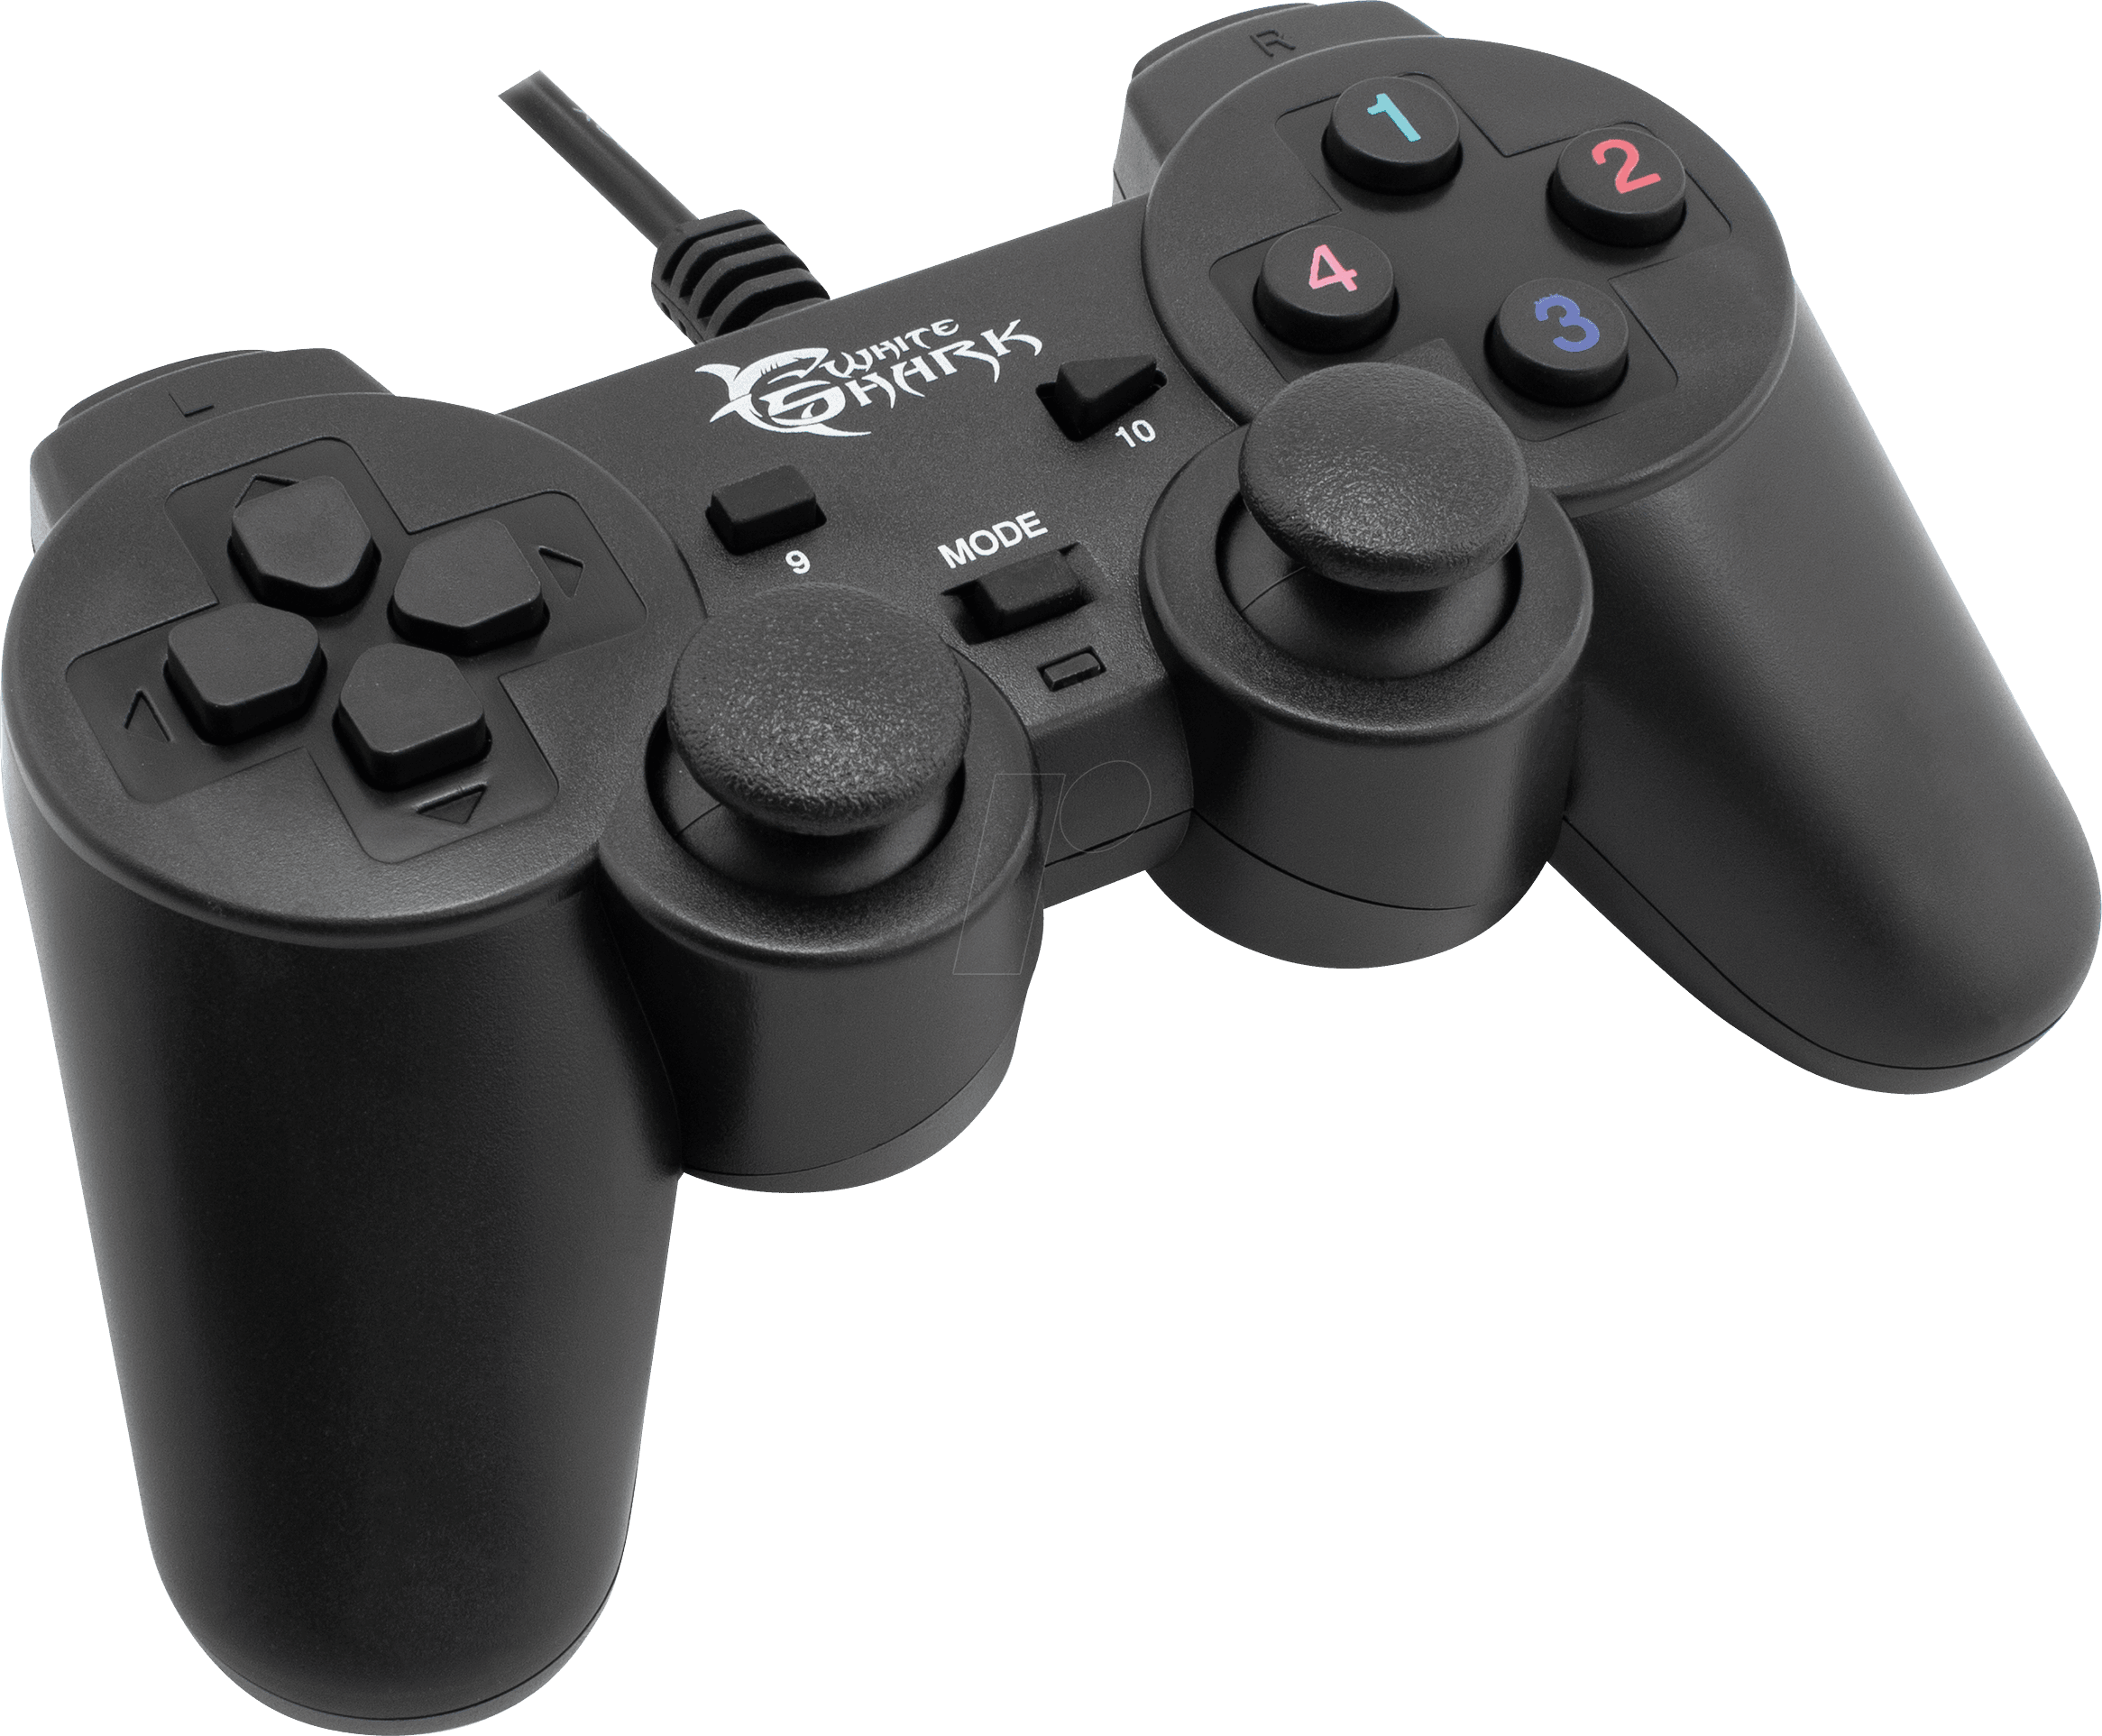 White Shark Hunter PC Game Controller (USB) - GameStore.mt | Powered by Flutisat